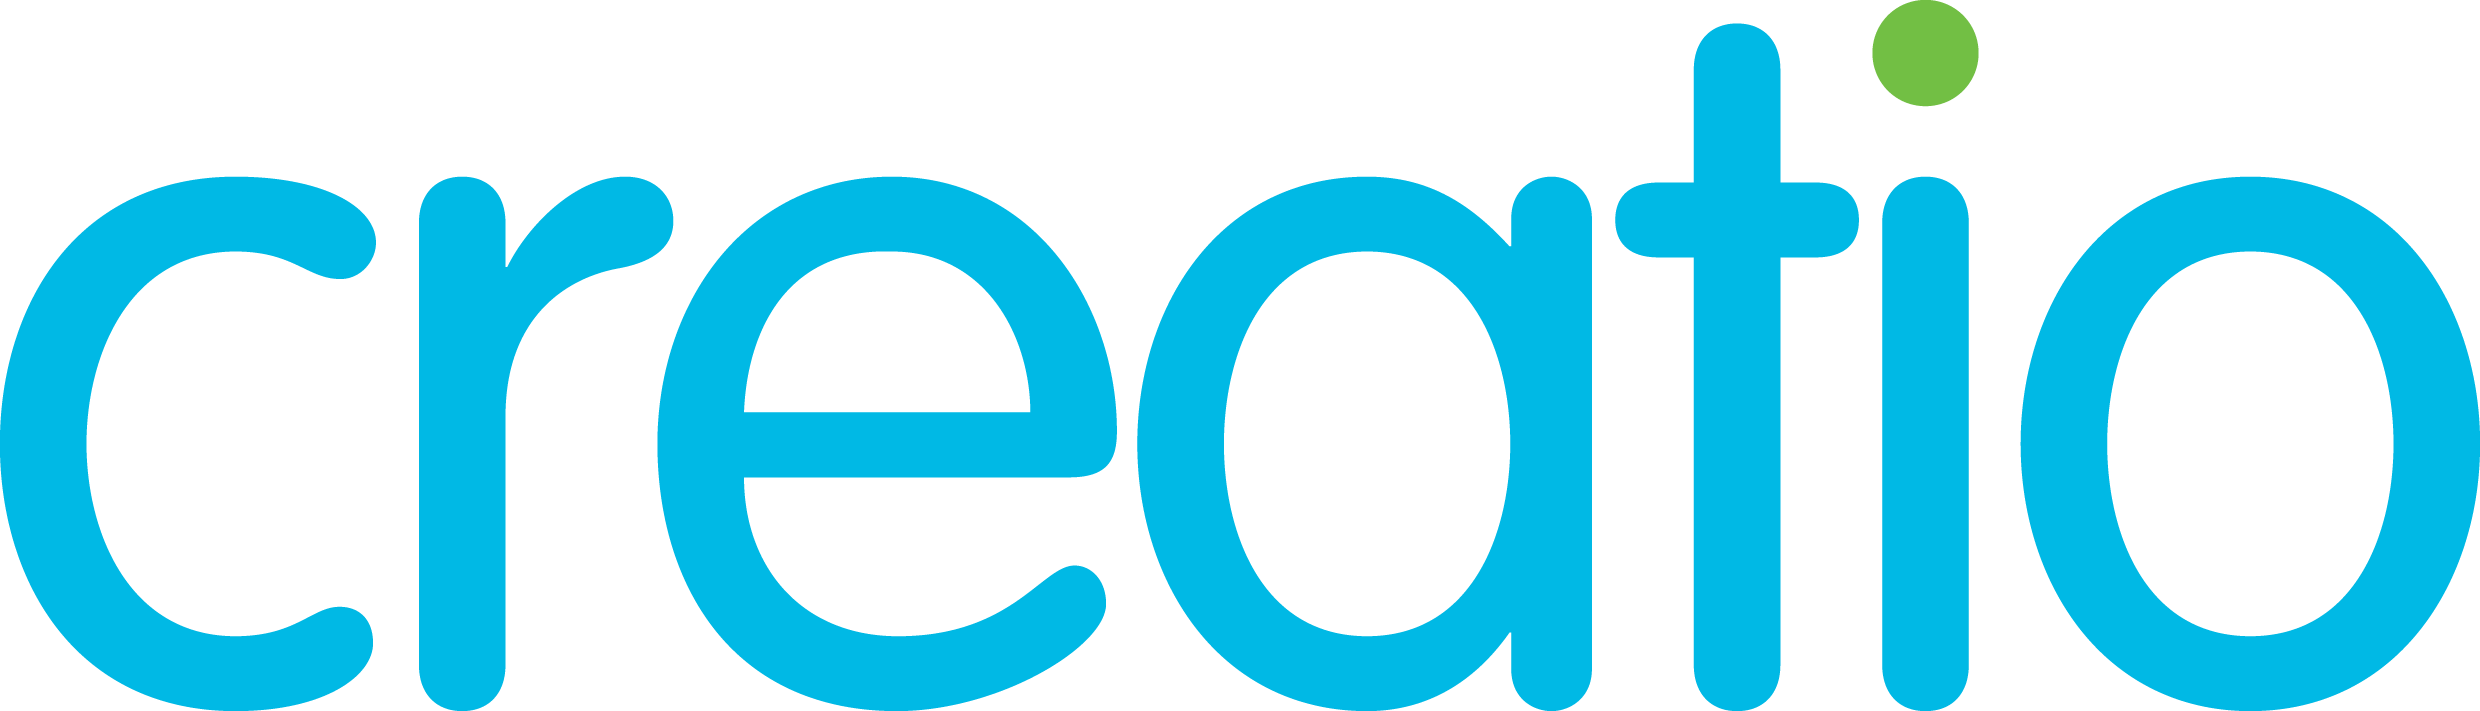 logo for Creatio Ltd